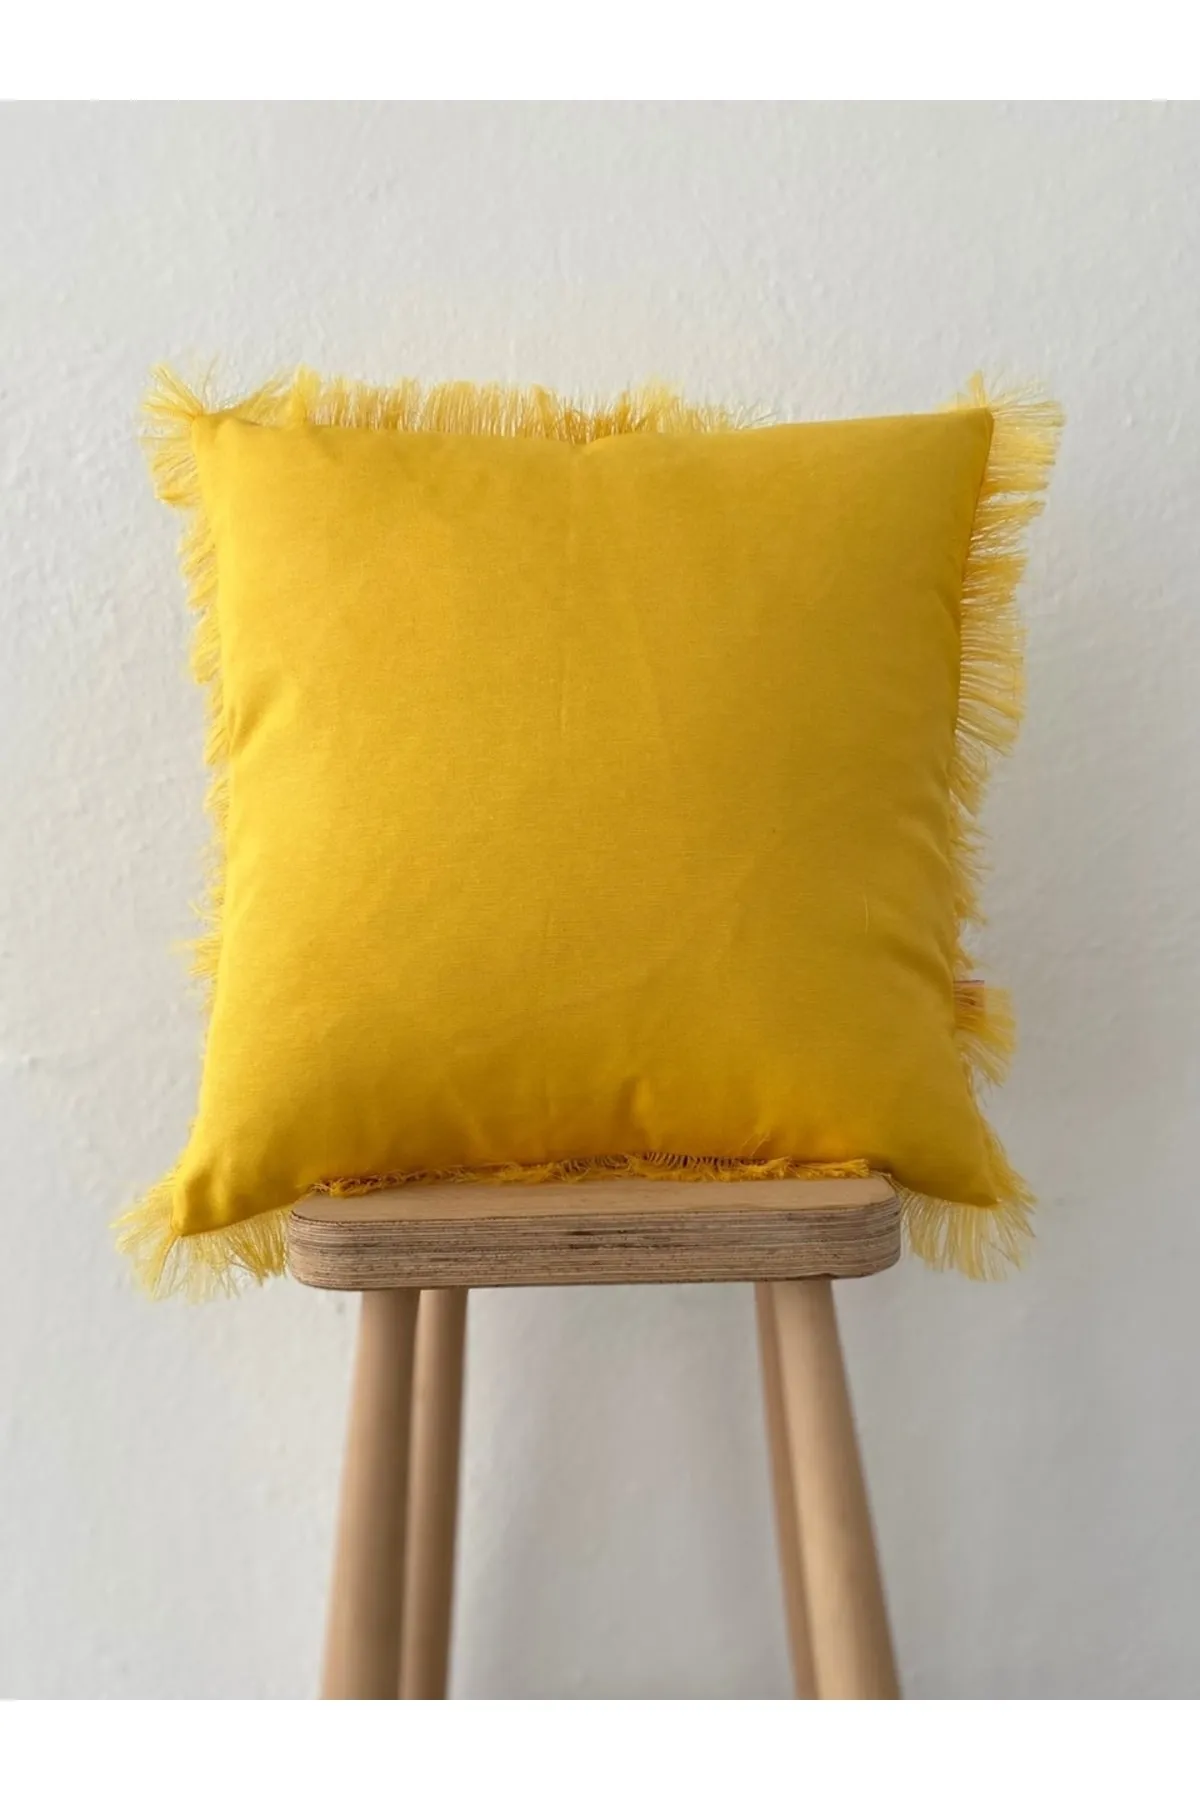 Yellow Tasseled Cushion Pillow Cover